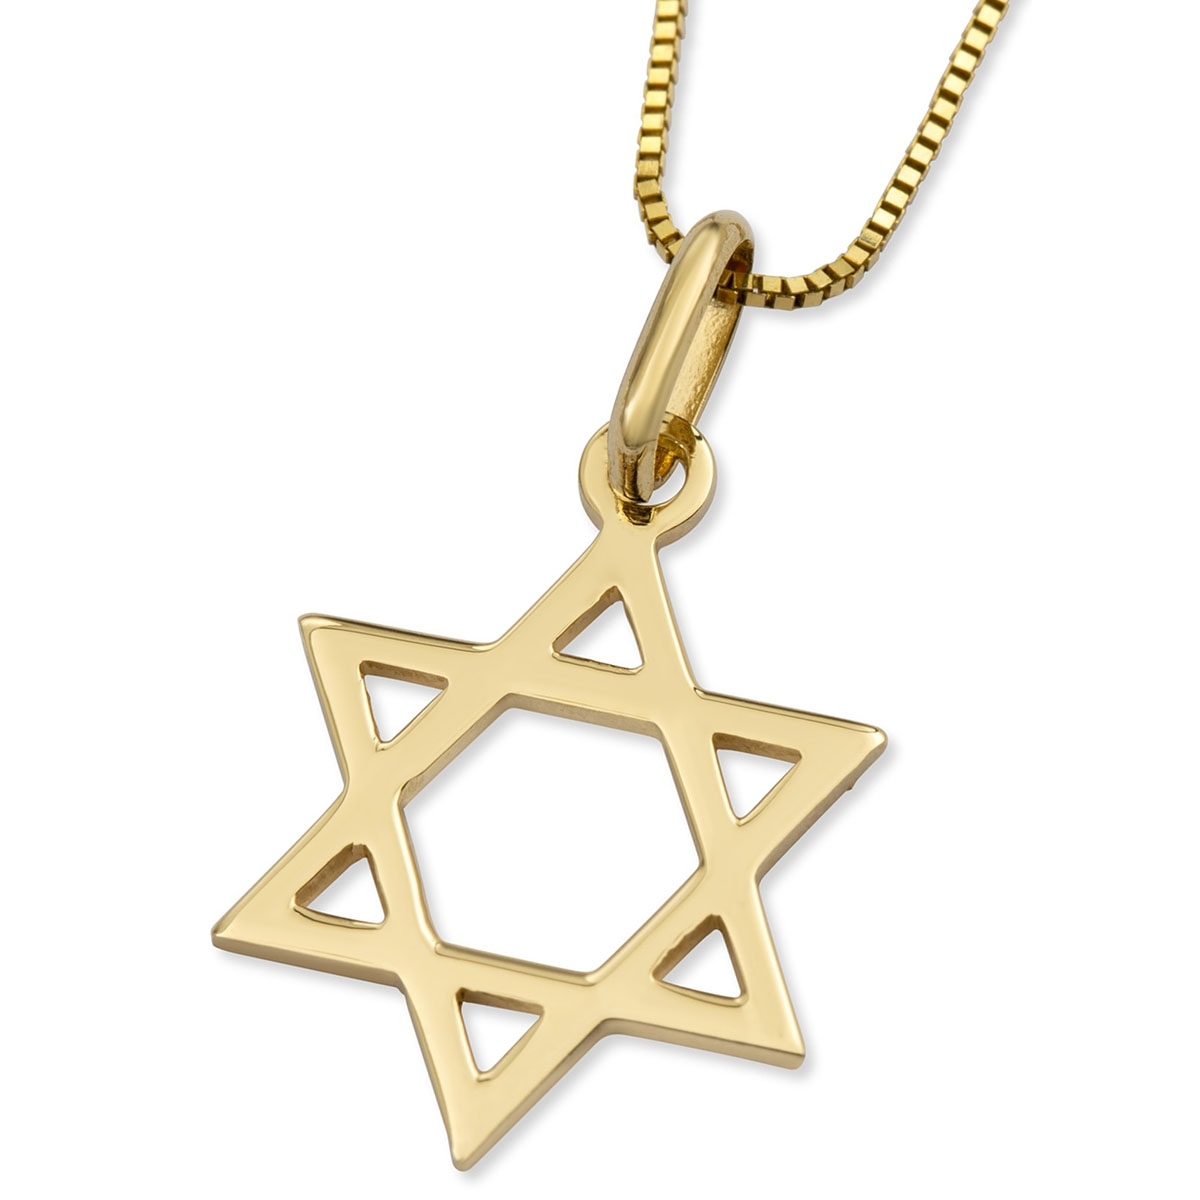 Stylish 14K Yellow Gold Star of David Pendant Necklace, Jewish